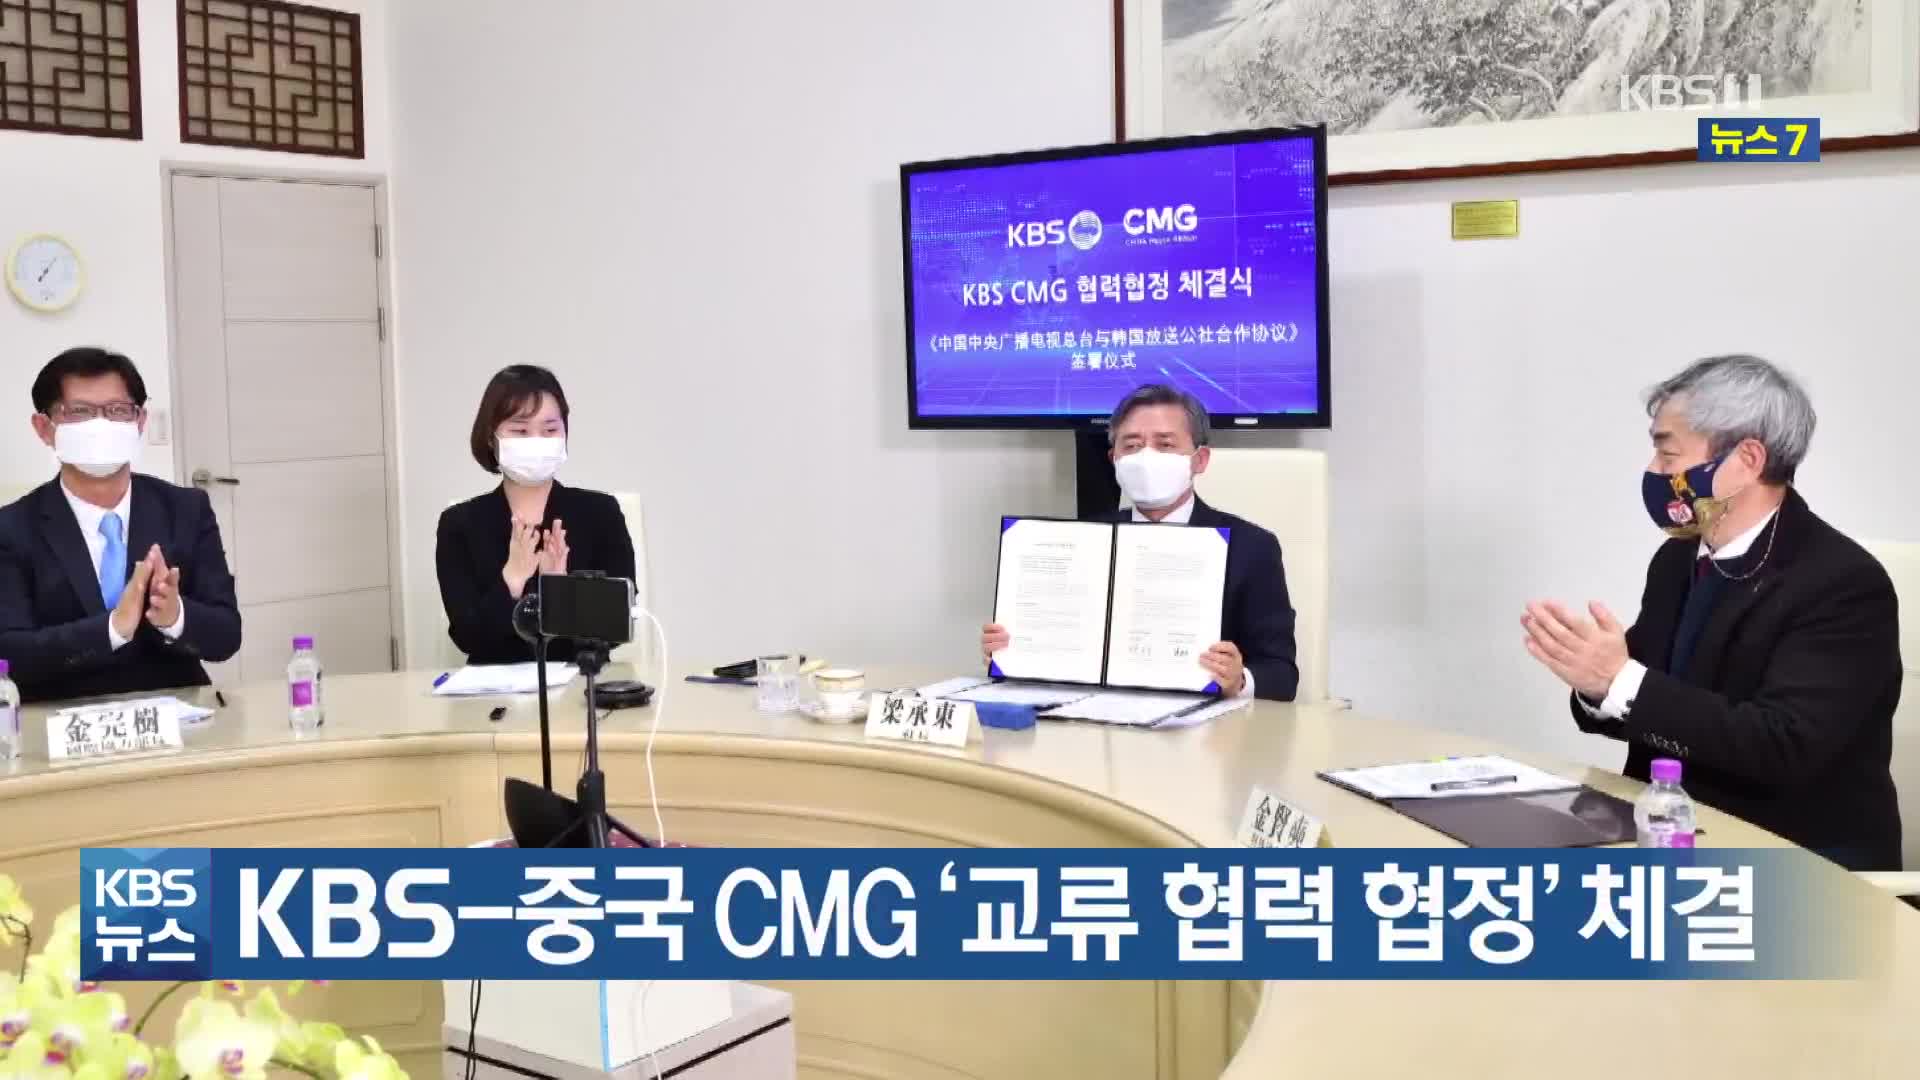 KBS-중국 CMG ‘교류 협력 협정’ 체결